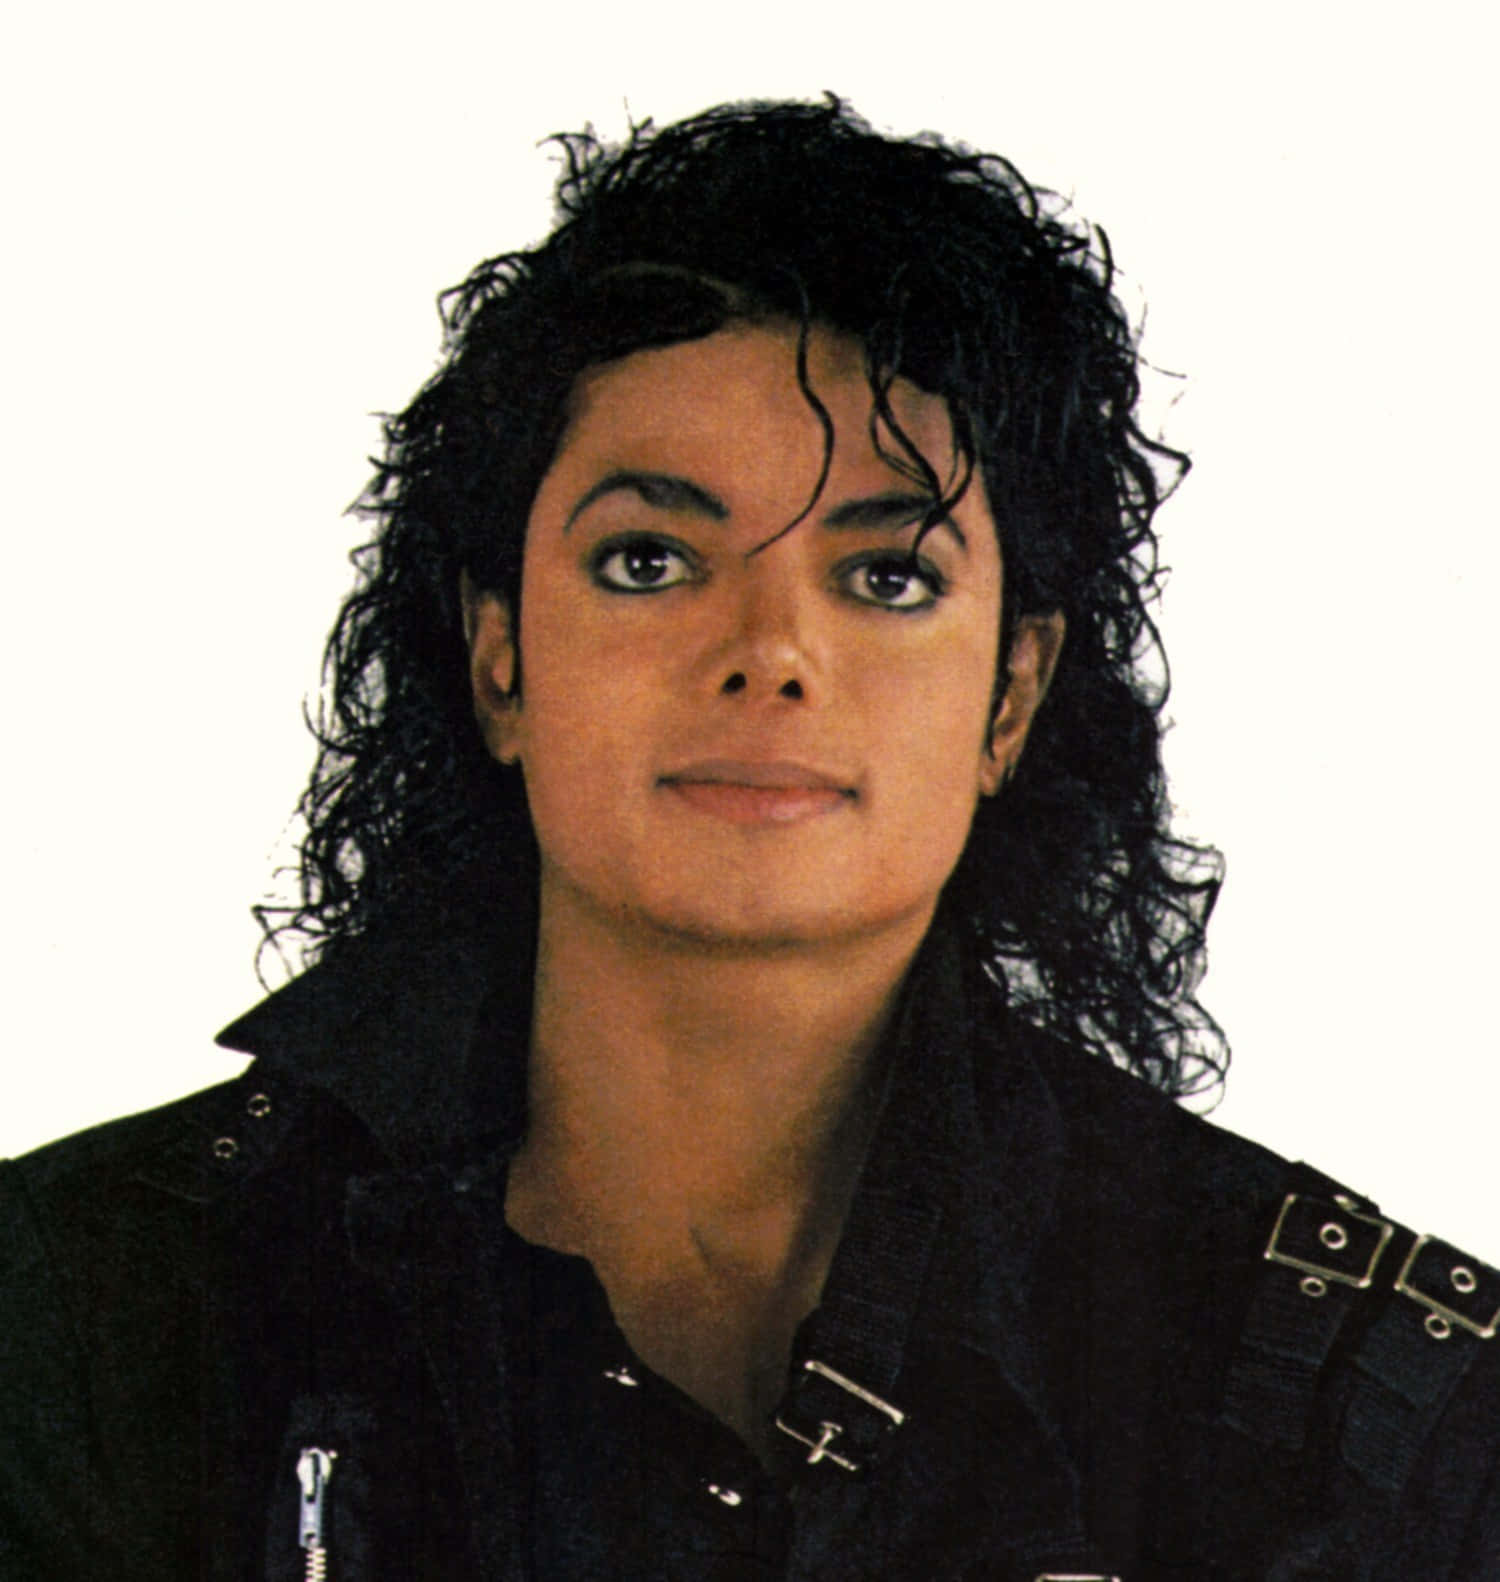 Michael Jackson billeder